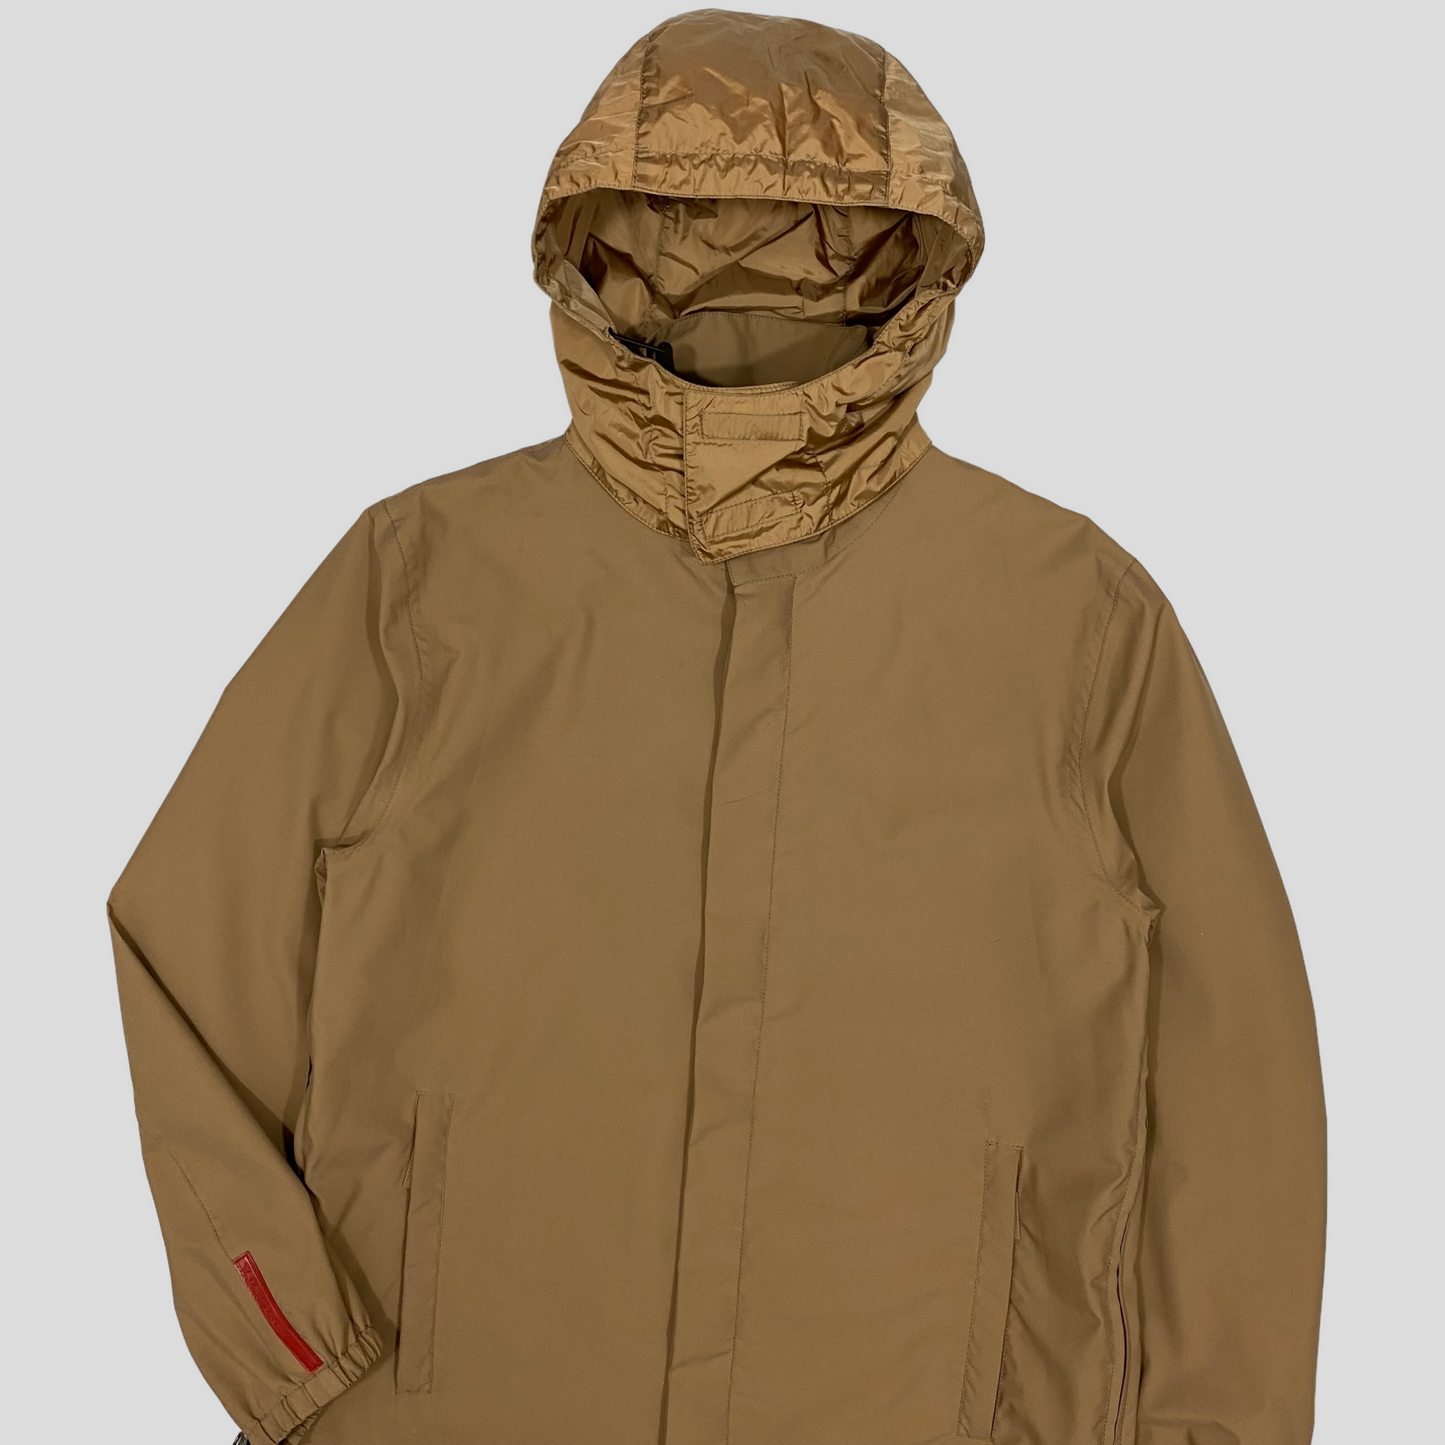 Prada Sport SS01 Goretex Jacket with Nylon Pocket Hood - L